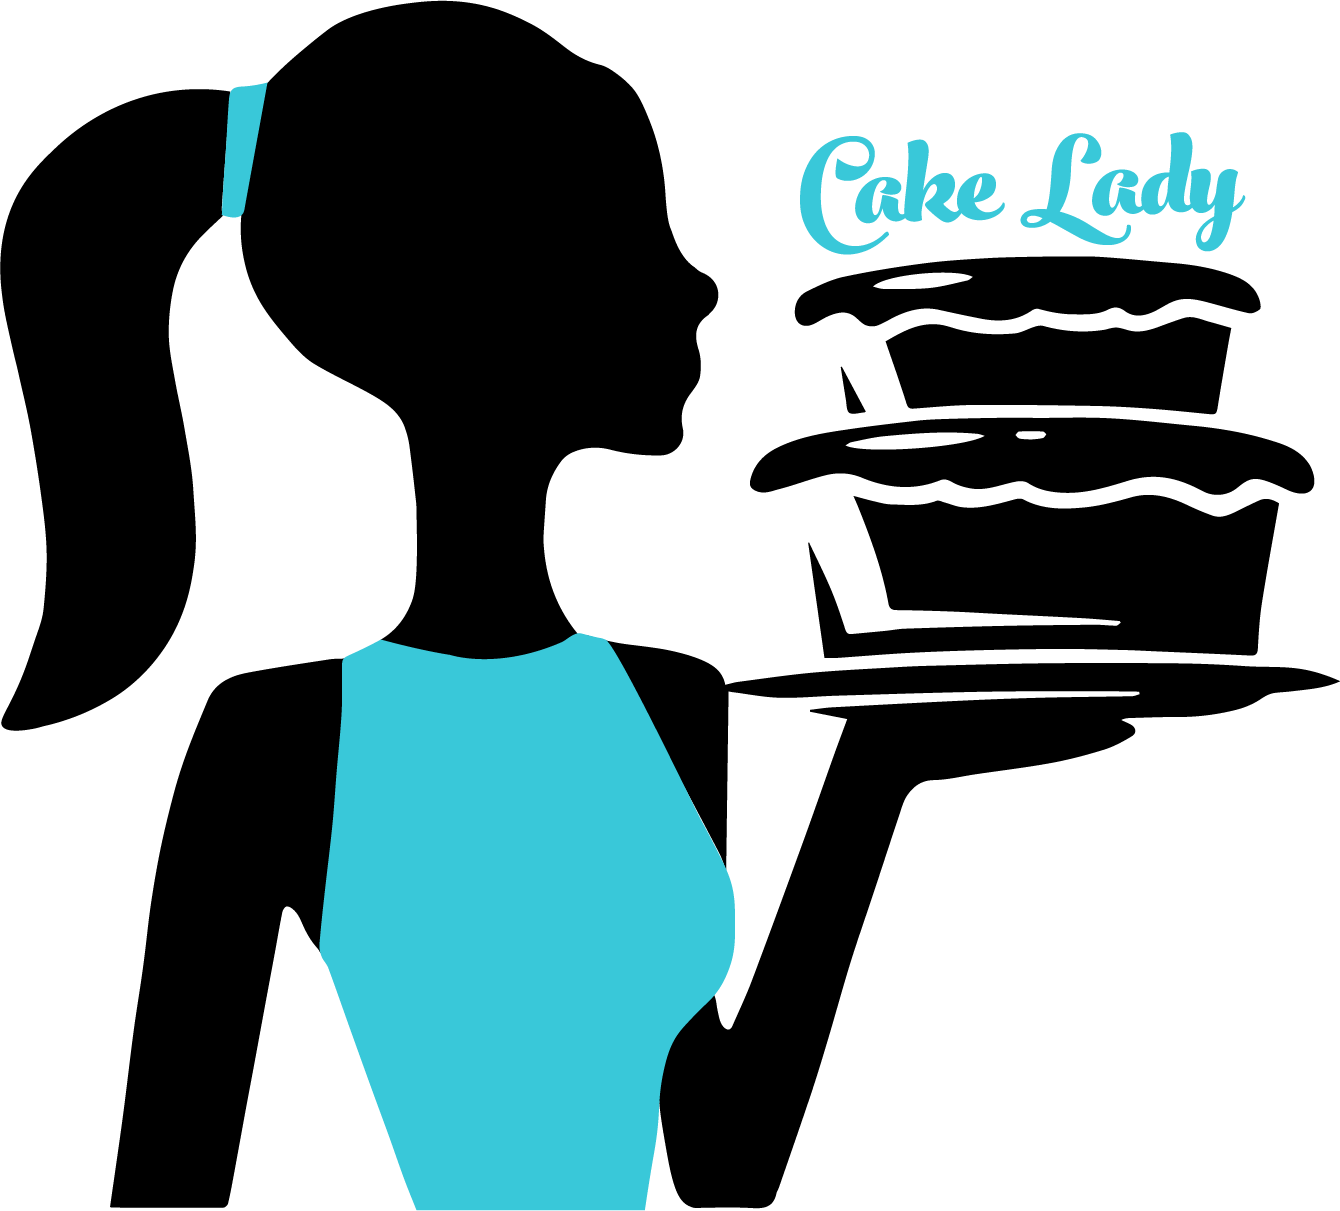 Birthday cakes - Harrogate - The Cake Lady Harrogate